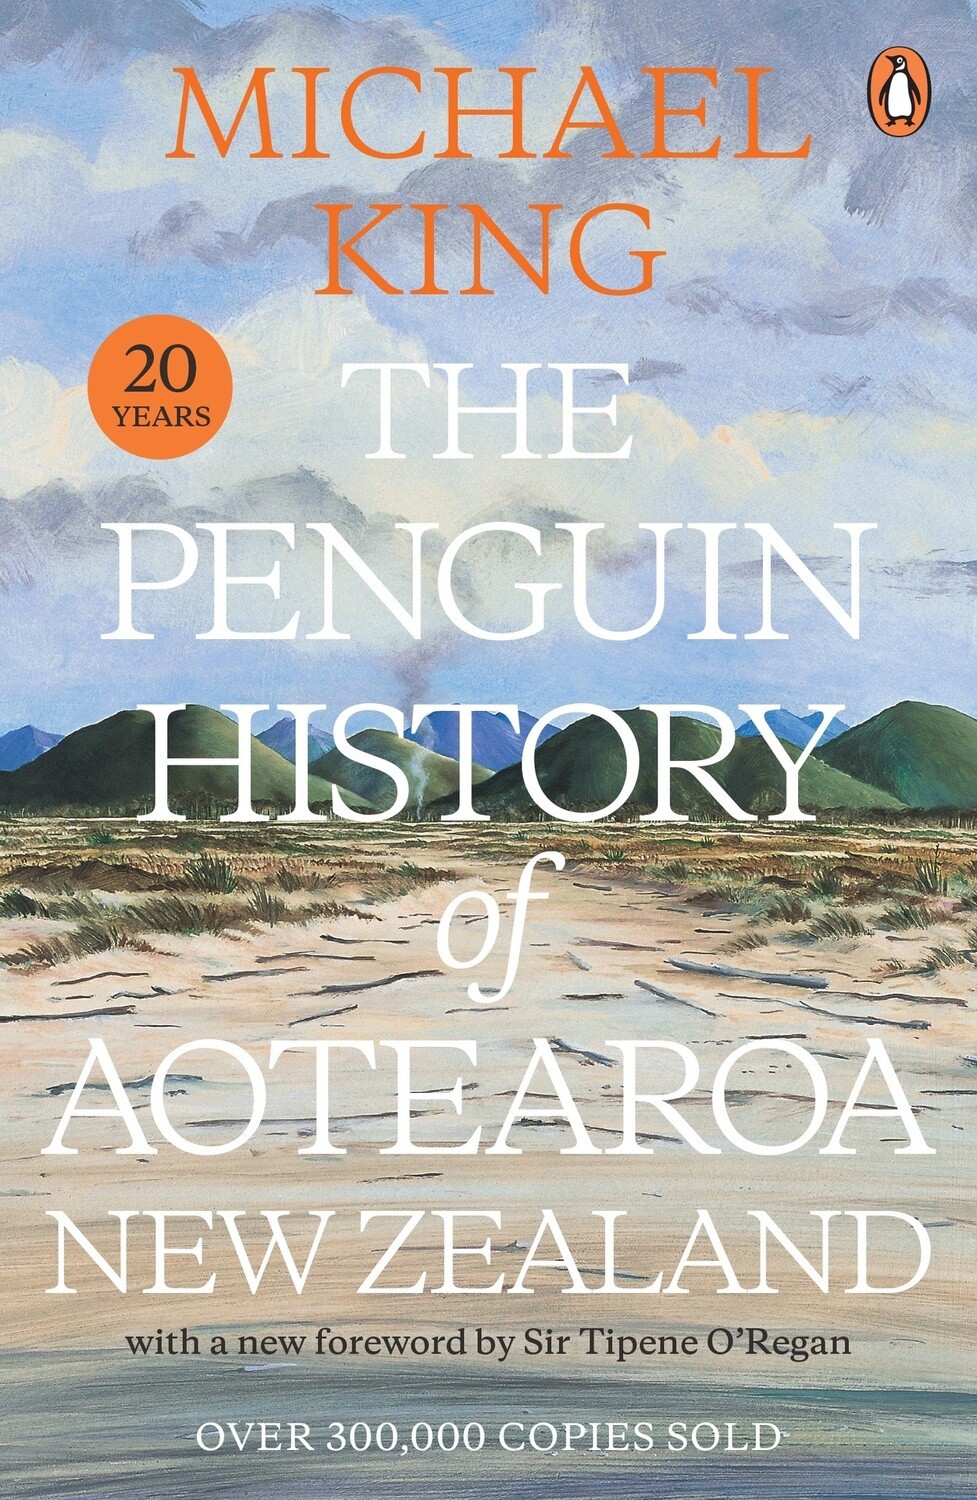 The Penguin History of Aotearoa New Zealand by Michael King